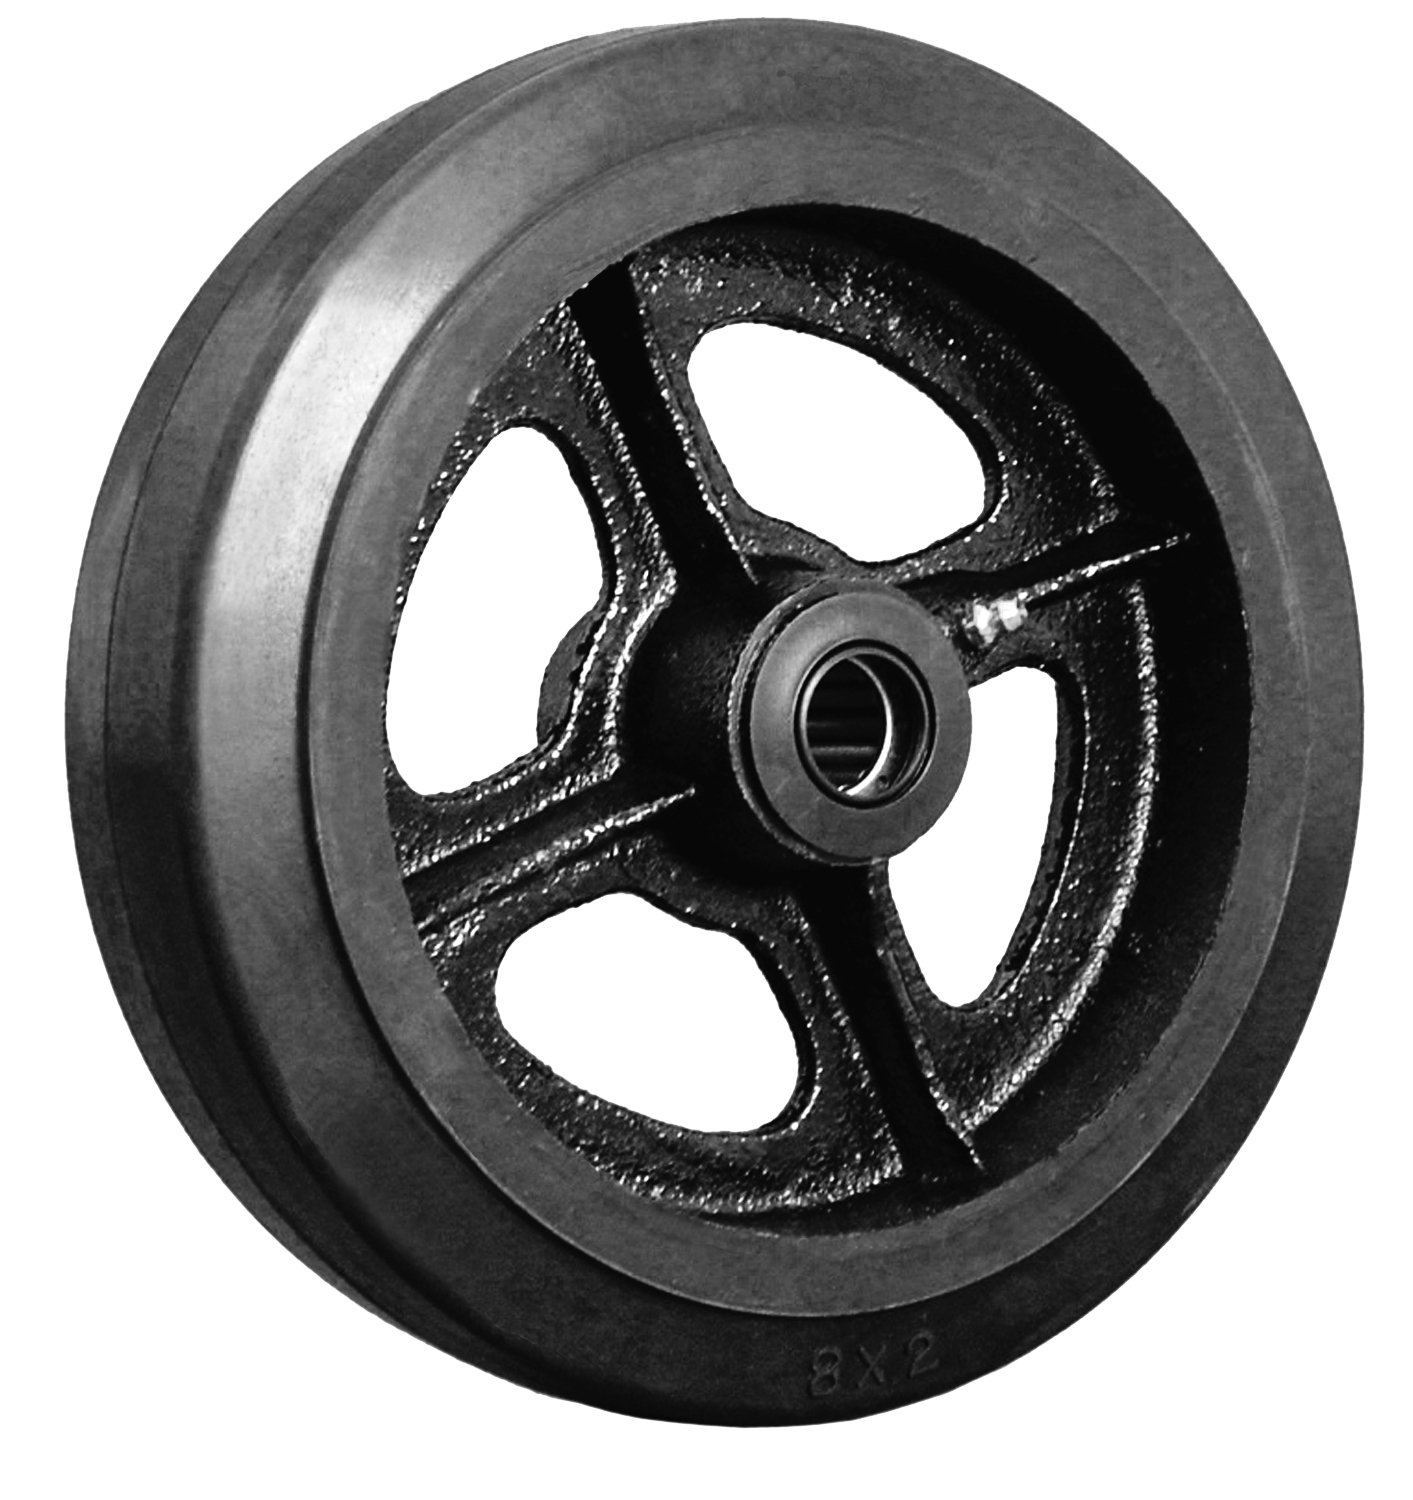 Rigid 10" x 2-1/2" Steel Wheel Caster 